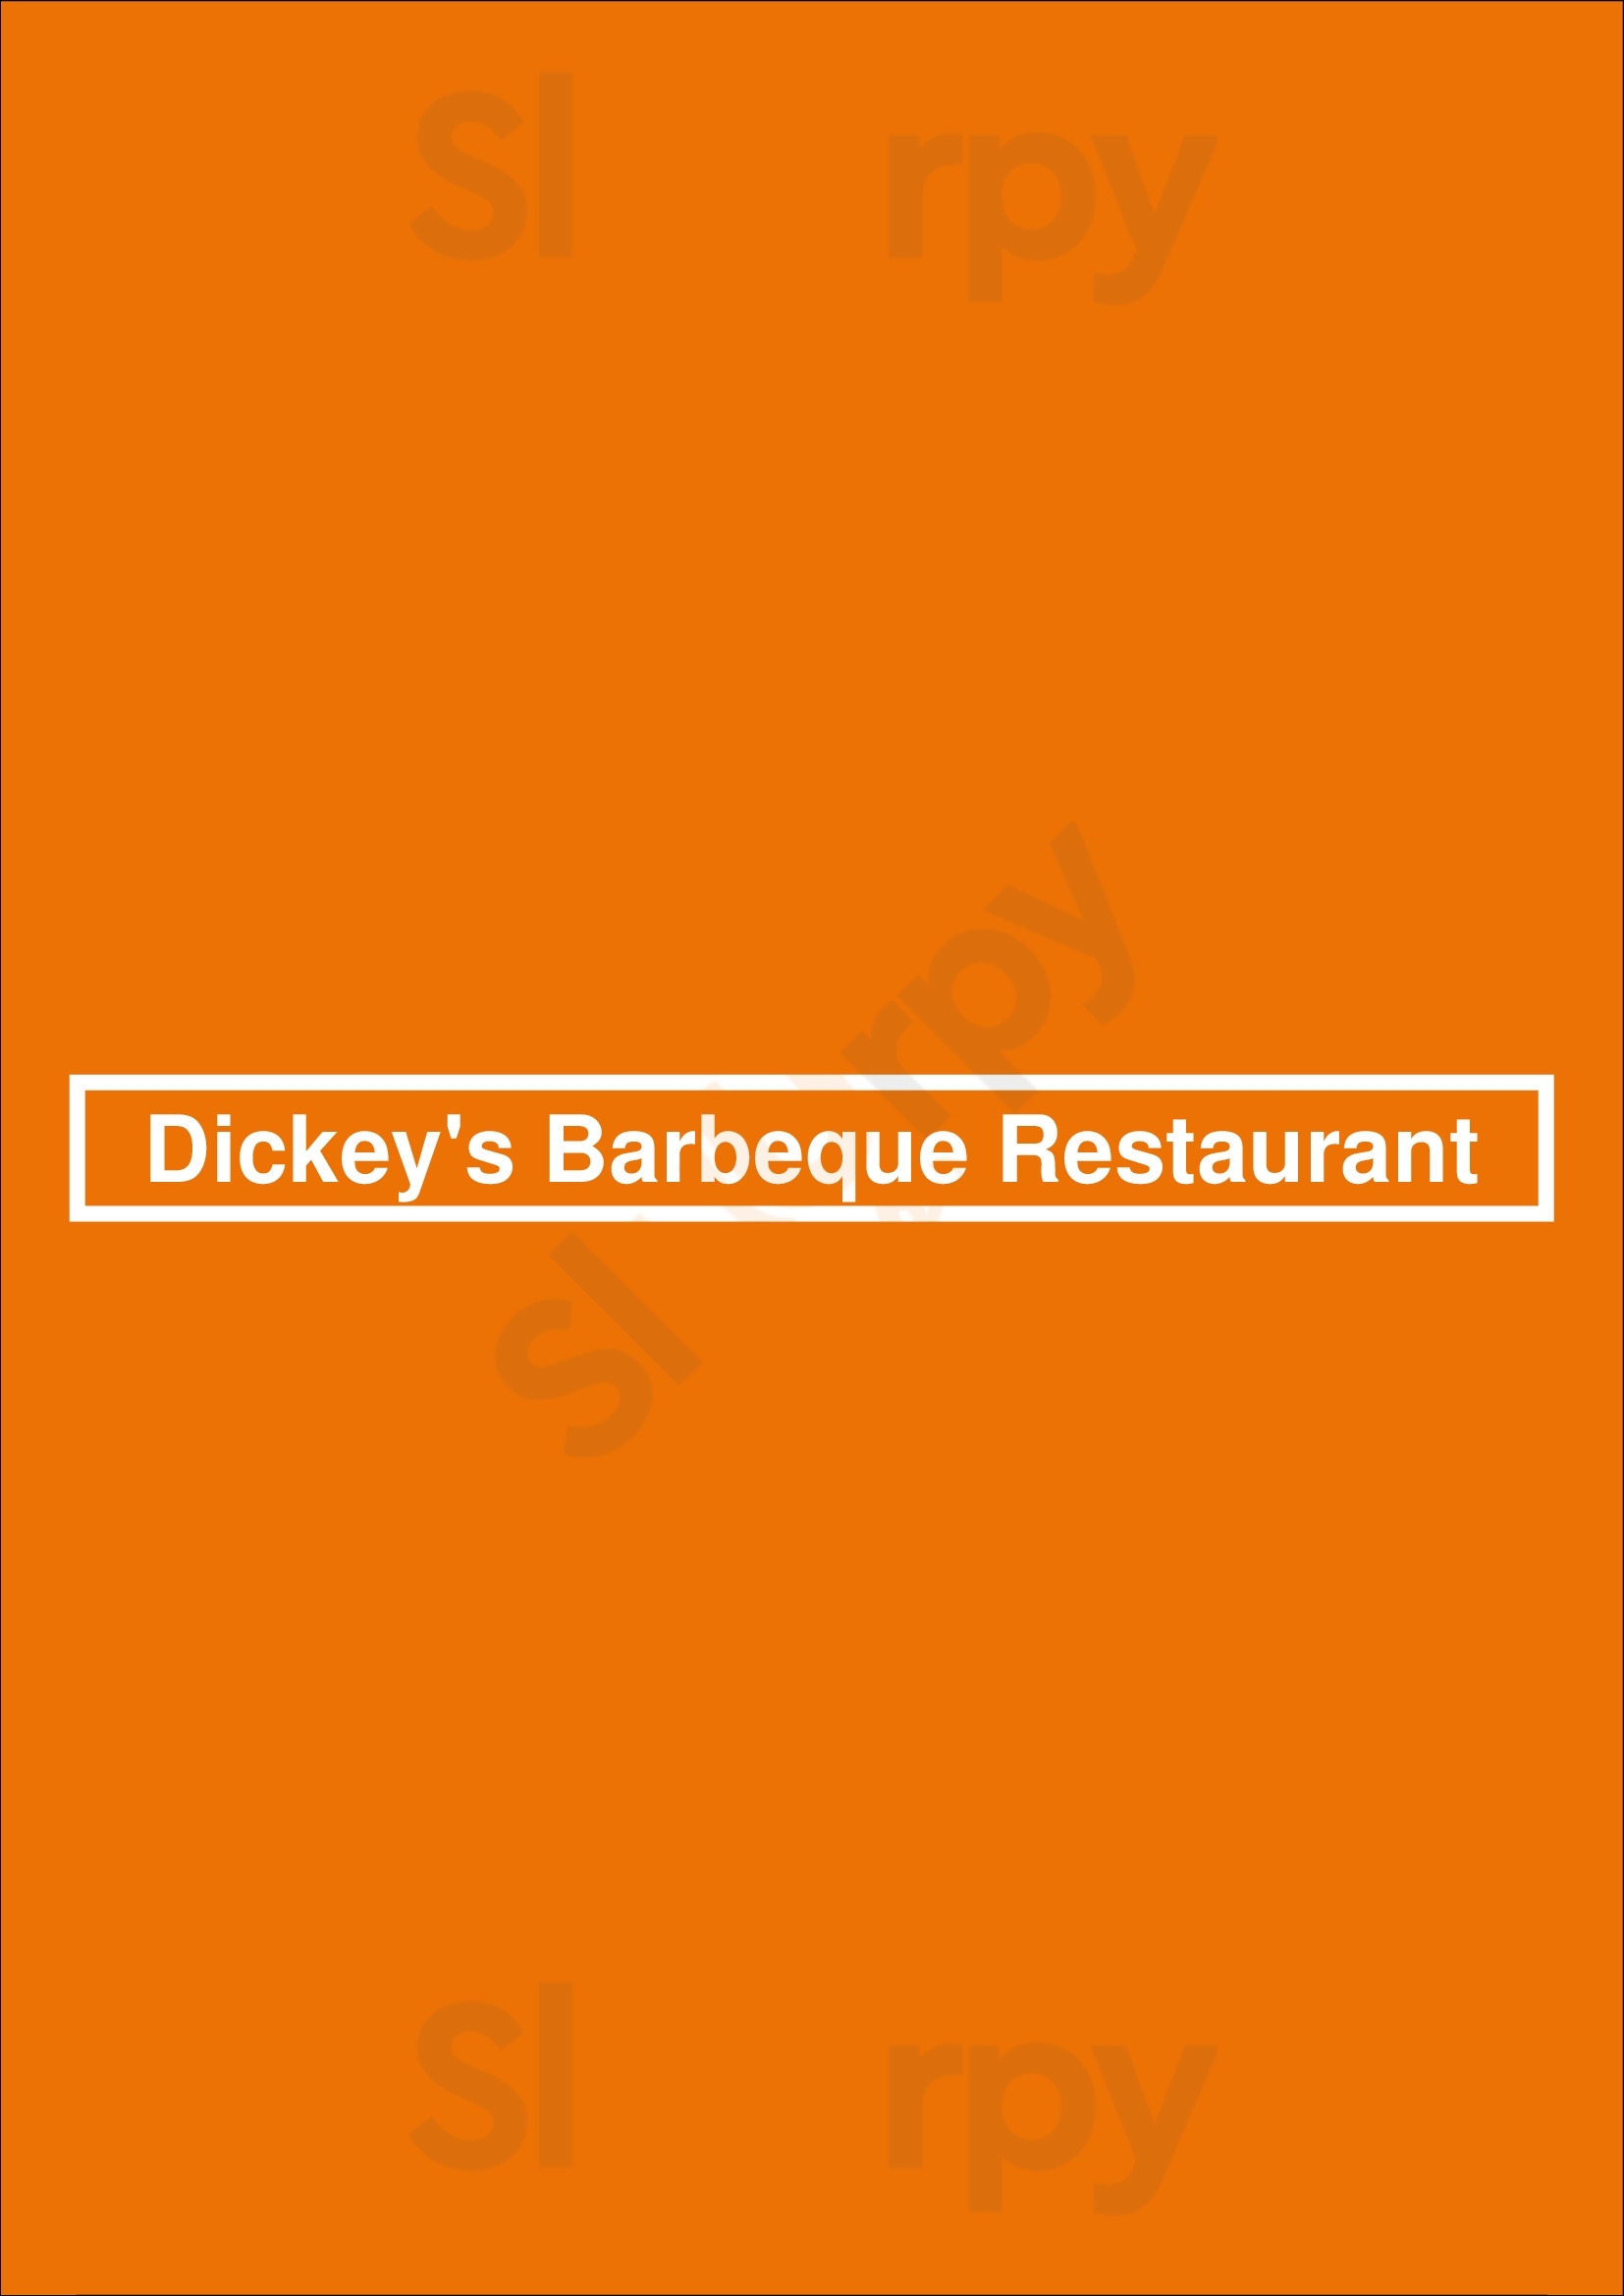 Dickey's Barbecue Pit Everett Menu - 1